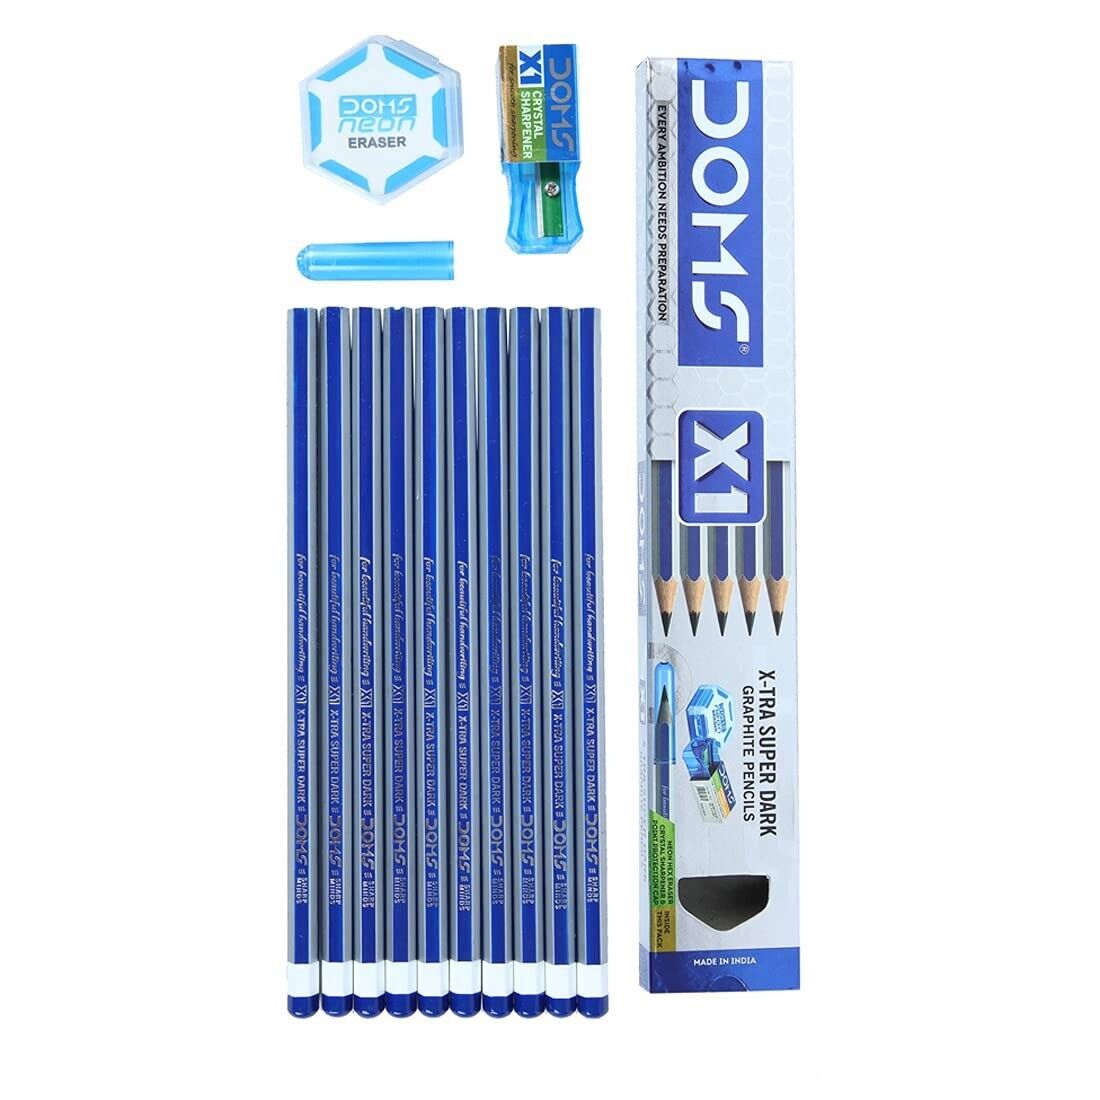 Doms X1 Xtra Super Dark Pack of 10 Free Eraser, Scale, Pencil Cap 